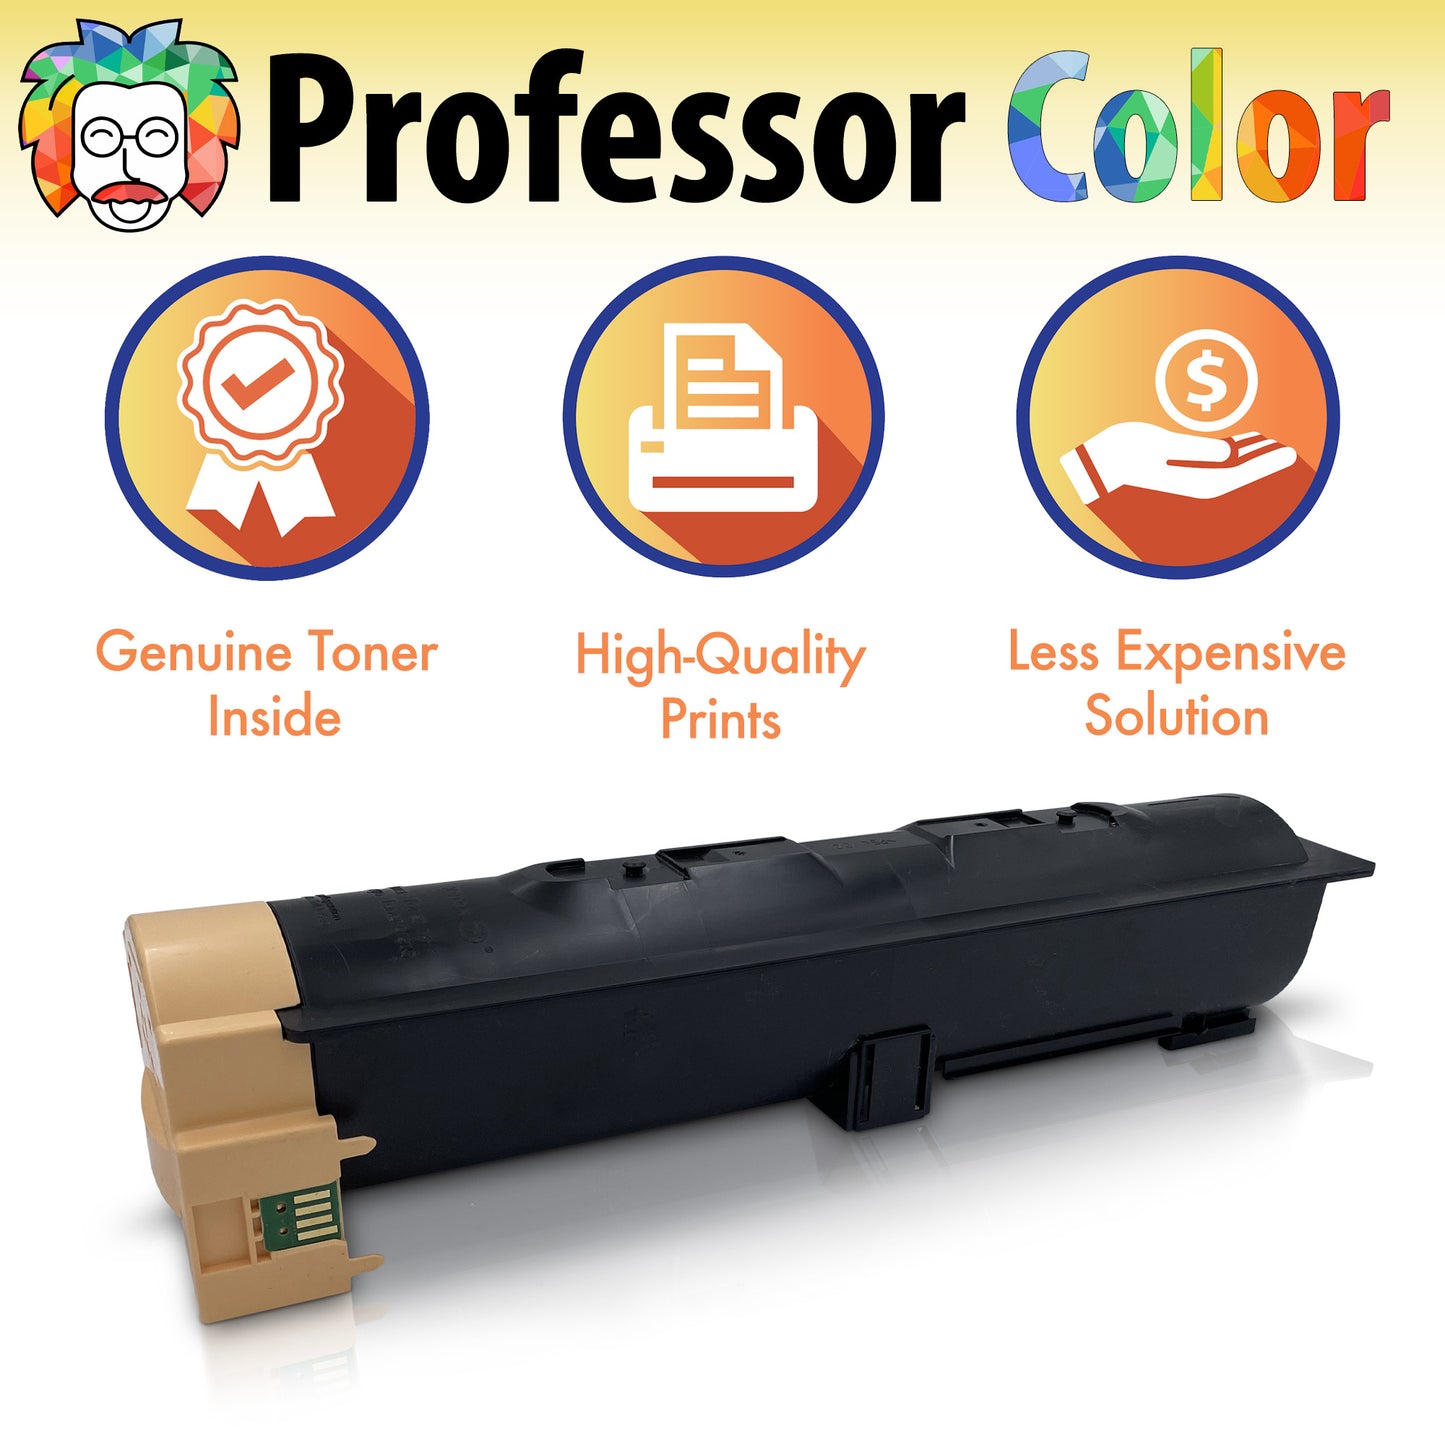 Standard Yield Black Toner - Professor Color